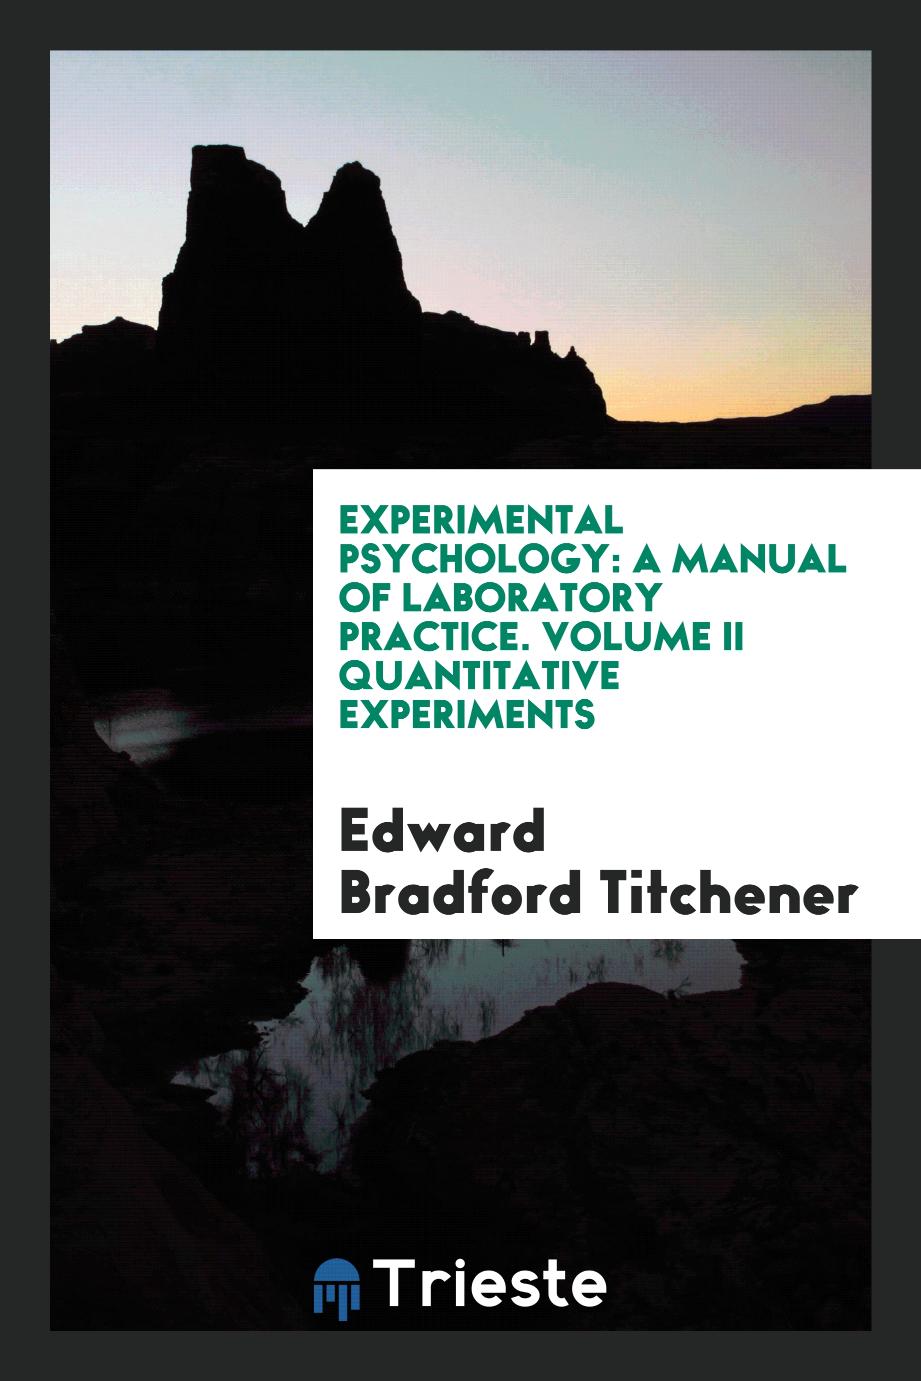 Experimental psychology: a manual of laboratory practice. Volume II Quantitative experiments